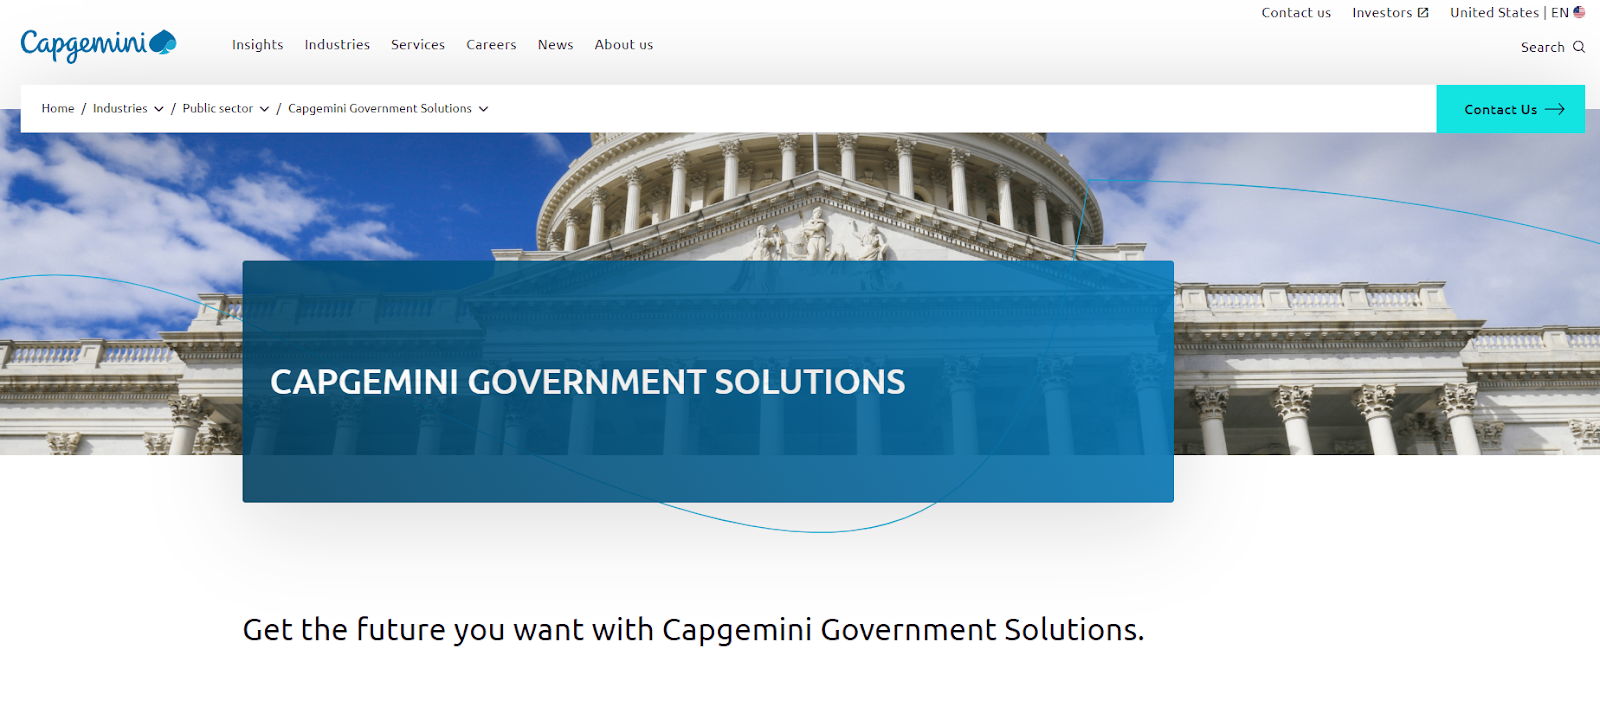 Capgemini National Cloud Computing Services